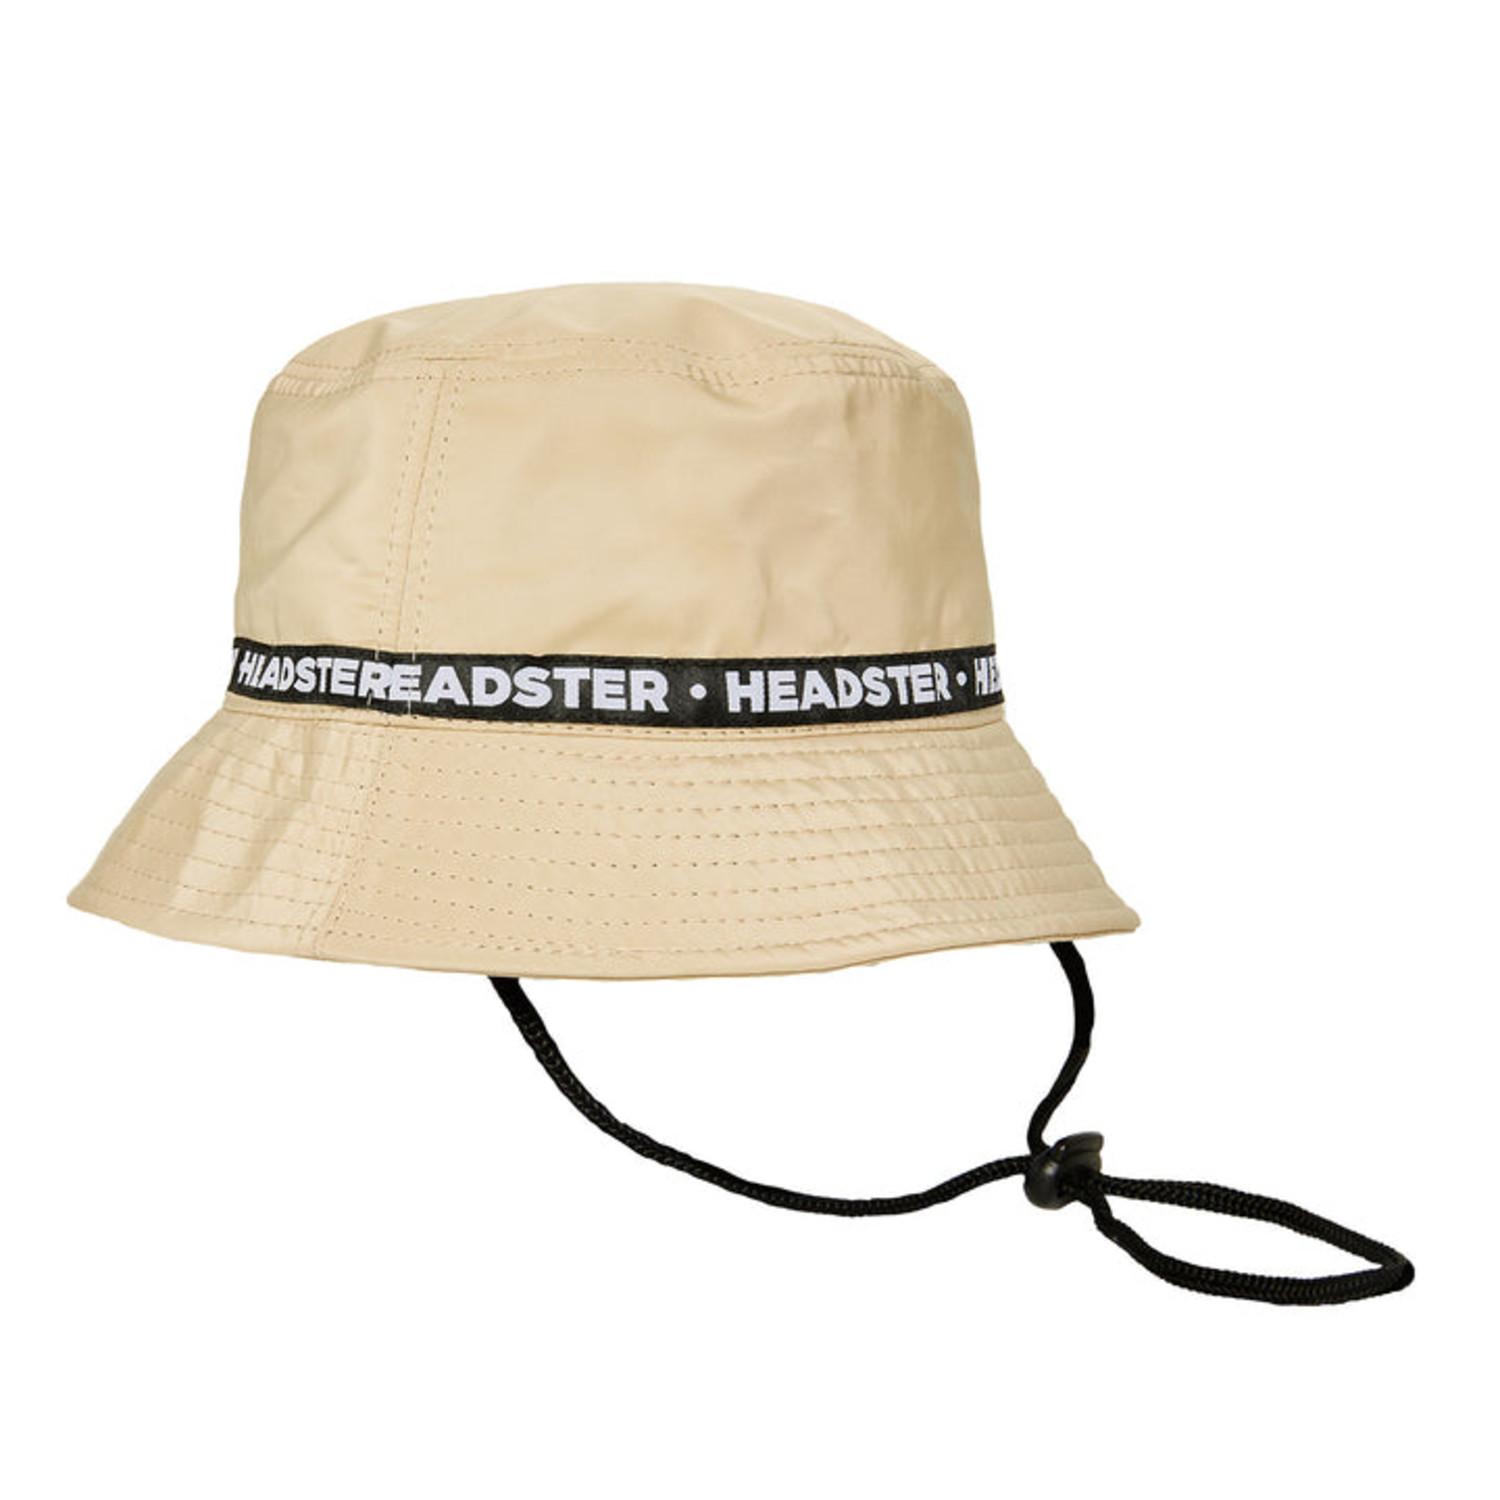 https://cdn.shoplightspeed.com/shops/616157/files/45432010/1500x4000x3/headster-safari-bucket-hat-headster.jpg